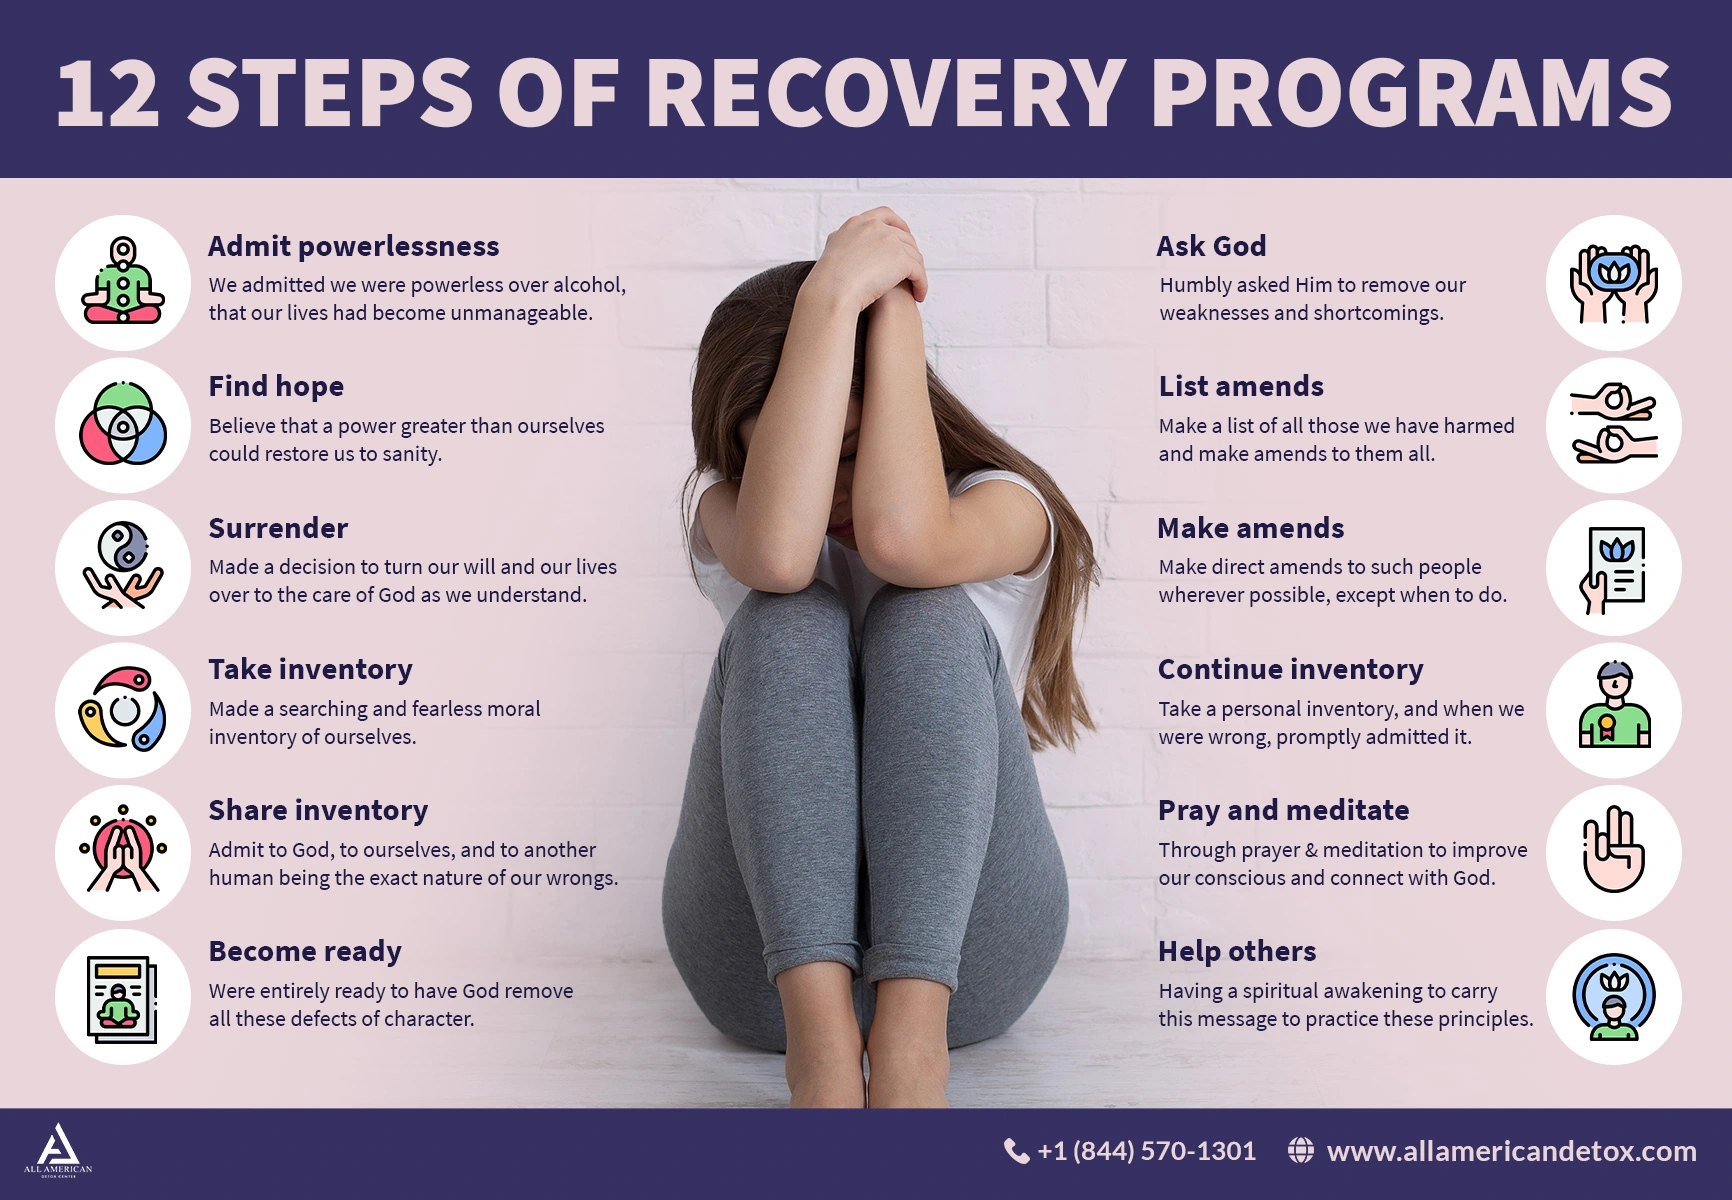 12 steps of recovery program